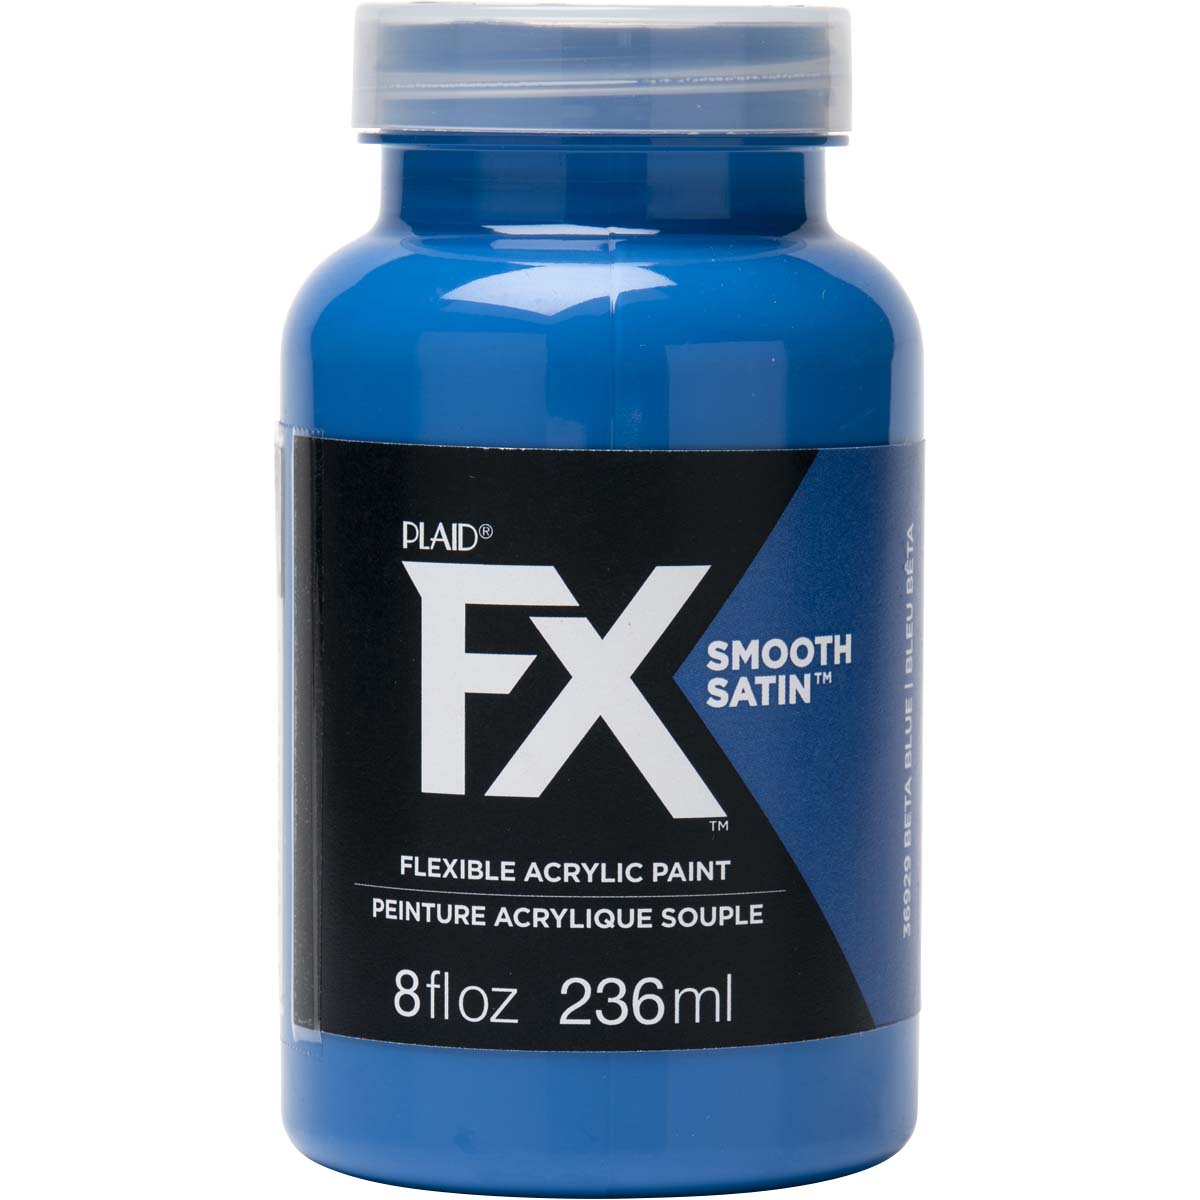 PlaidFX Smooth Satin Flexible Acrylic Paint - Beta Blue, 8 oz. - 36929